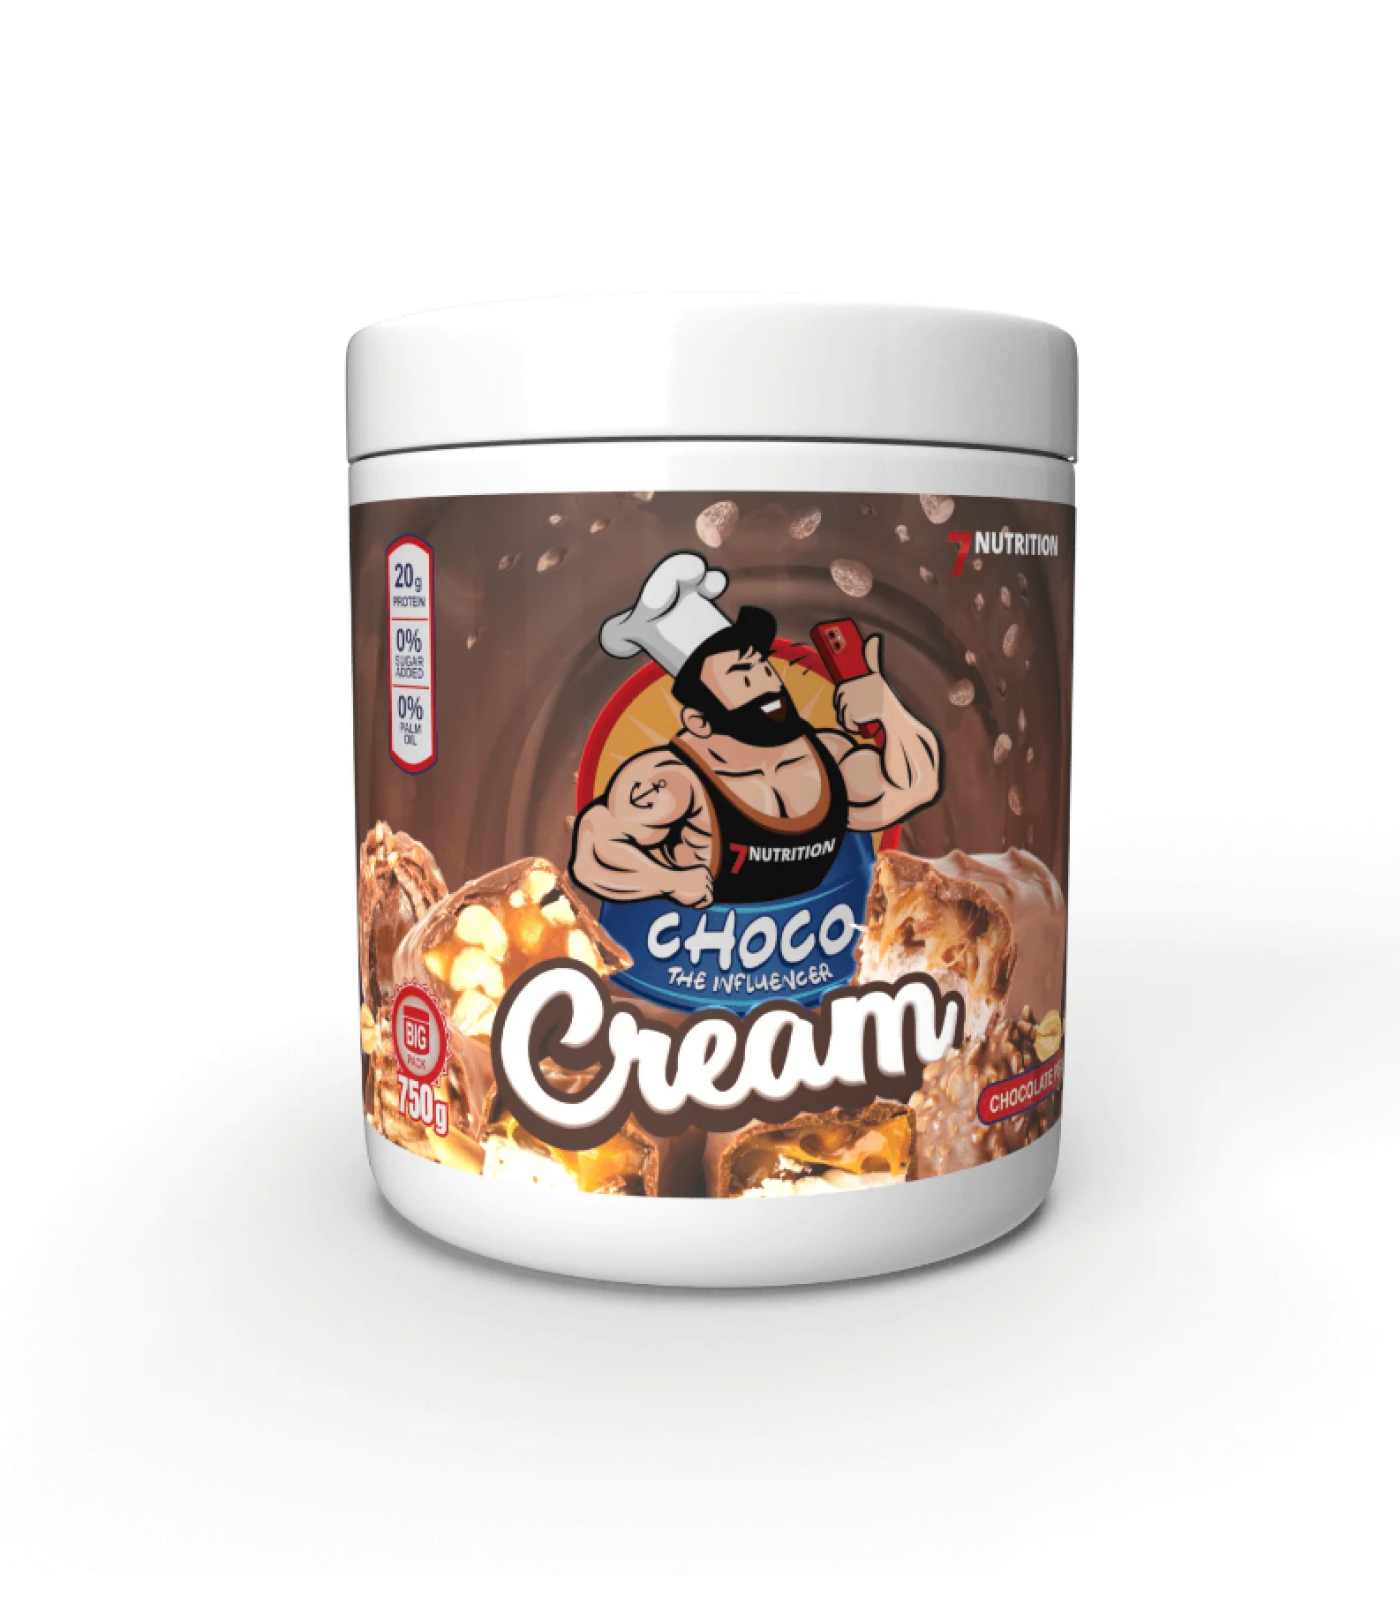 7Nutrition - Cream Chocolate Peanut Crunch / 750g​